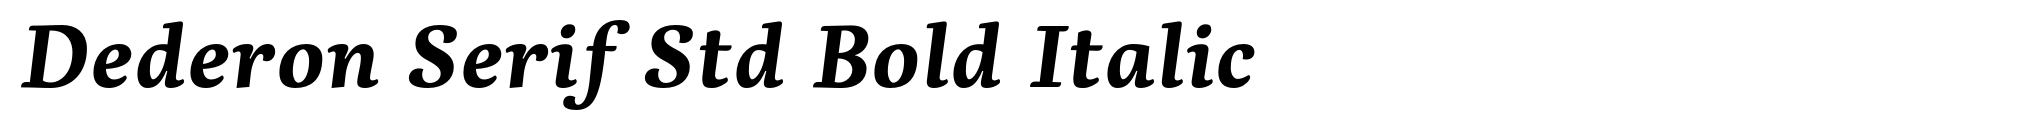 Dederon Serif Std Bold Italic image